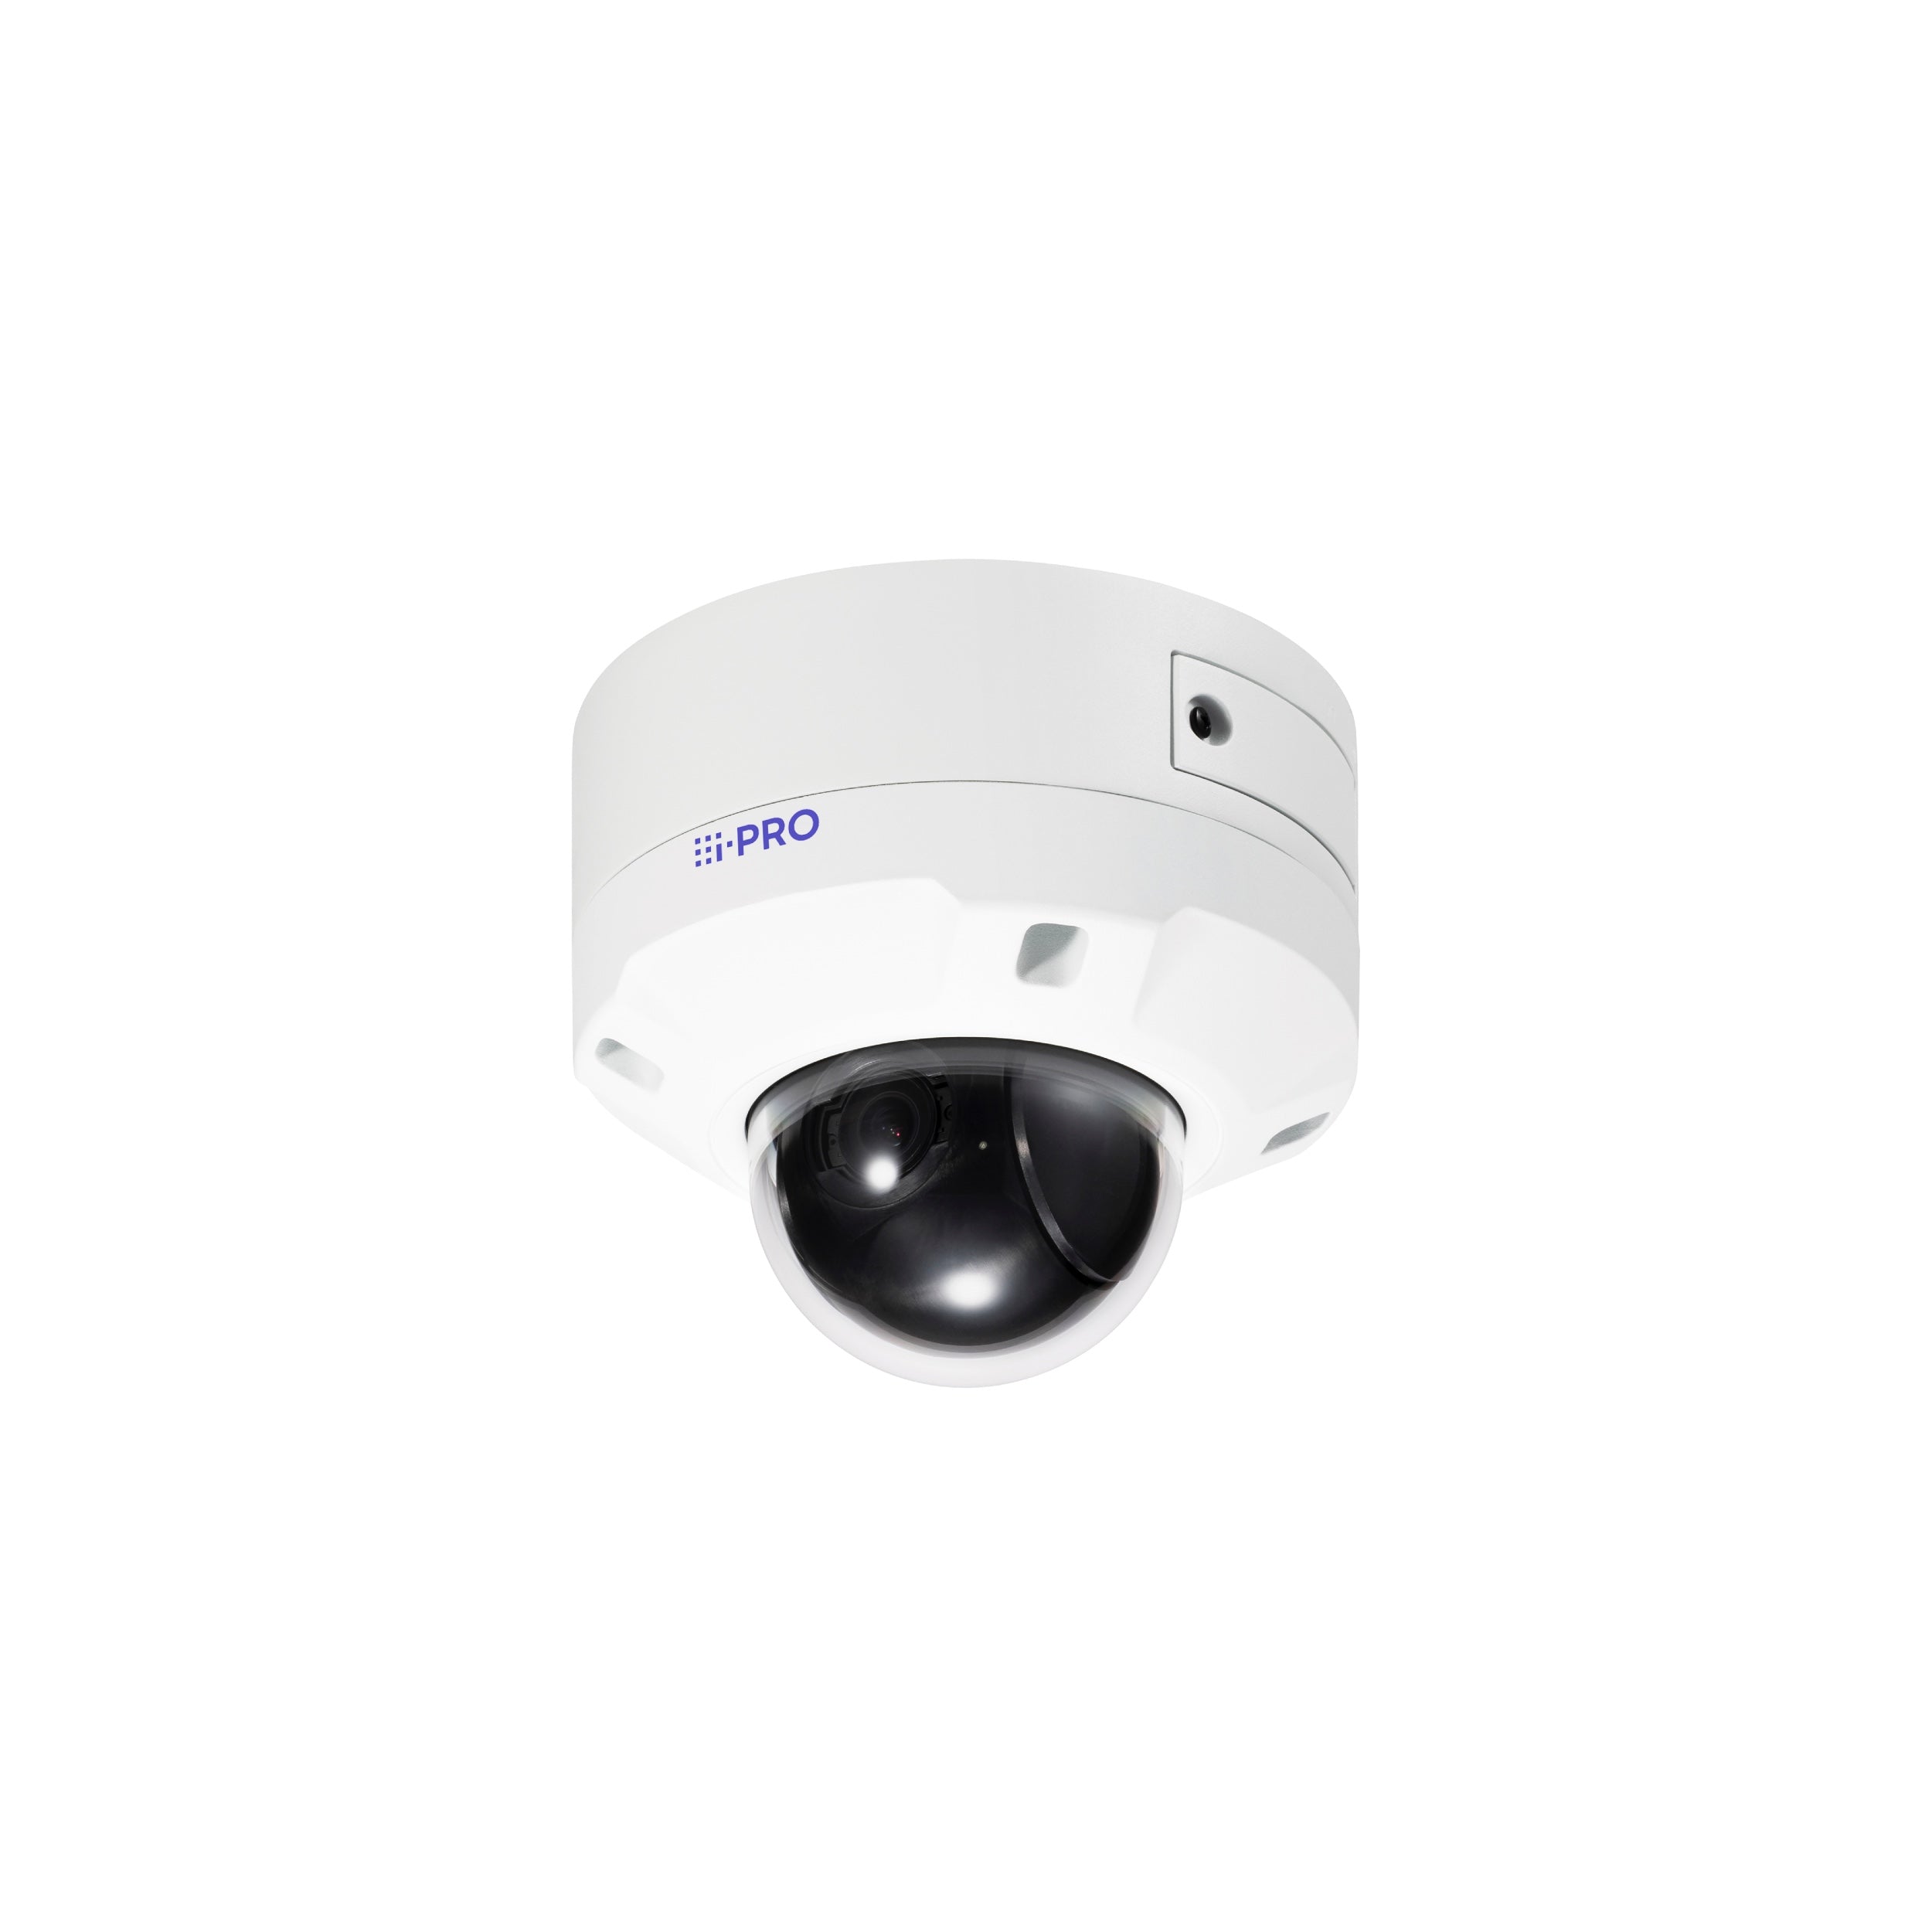 i-PRO WV-S65300-ZY 2MP (1080p) 3.1x Outdoor PTZ Network Camera